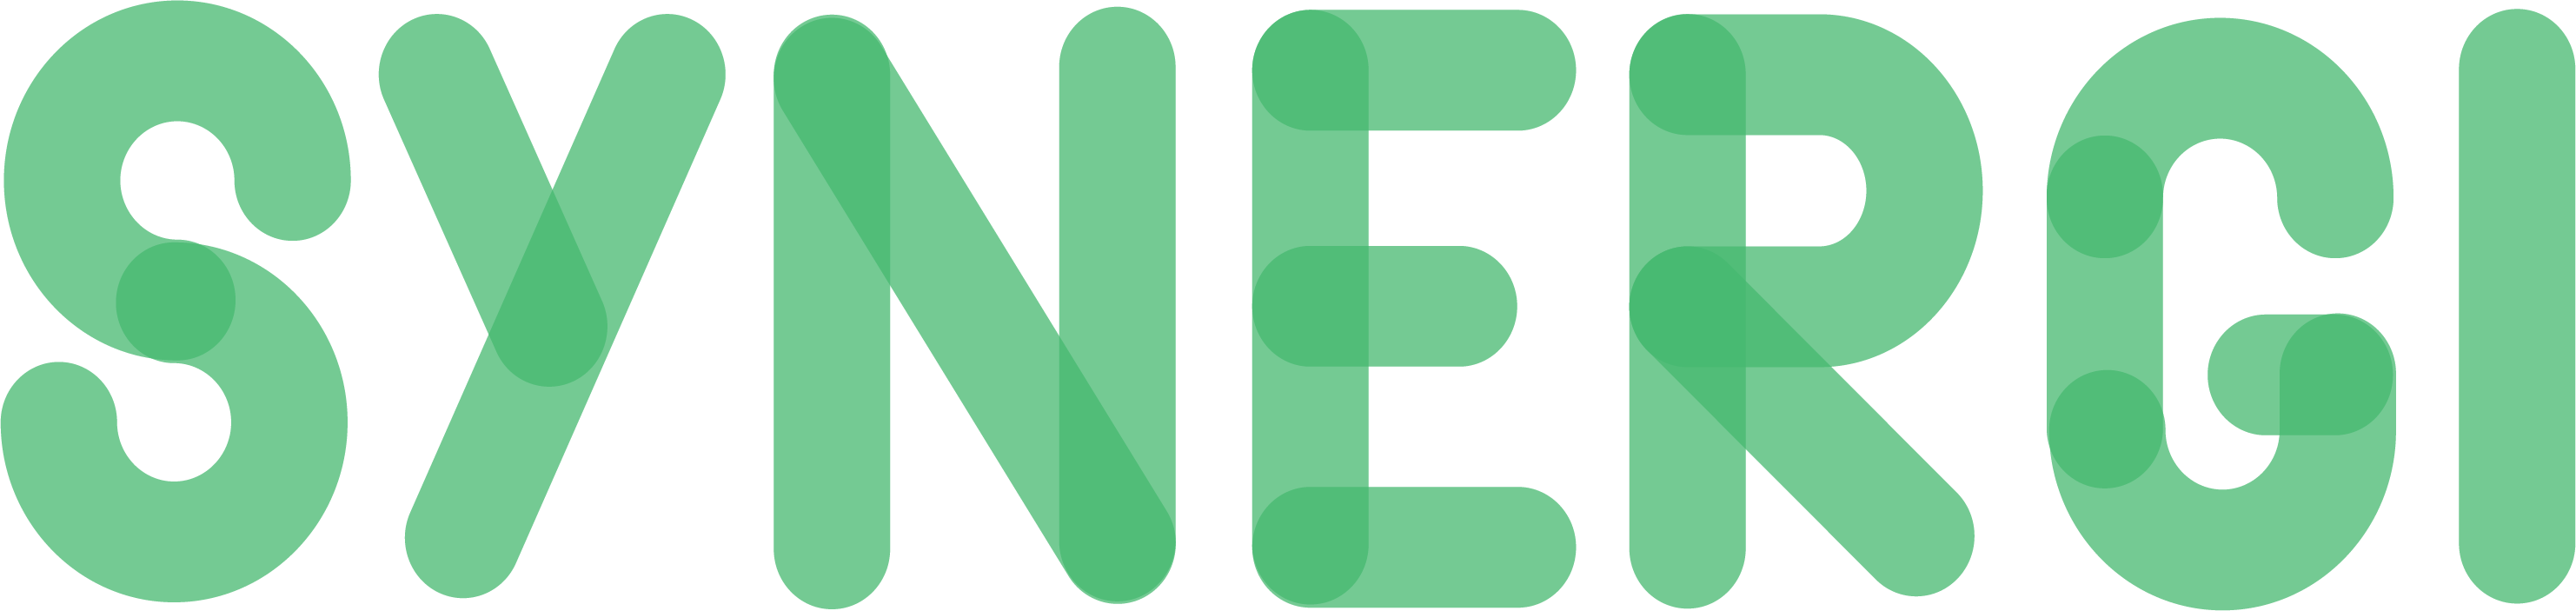 SYNERGI logo grøn